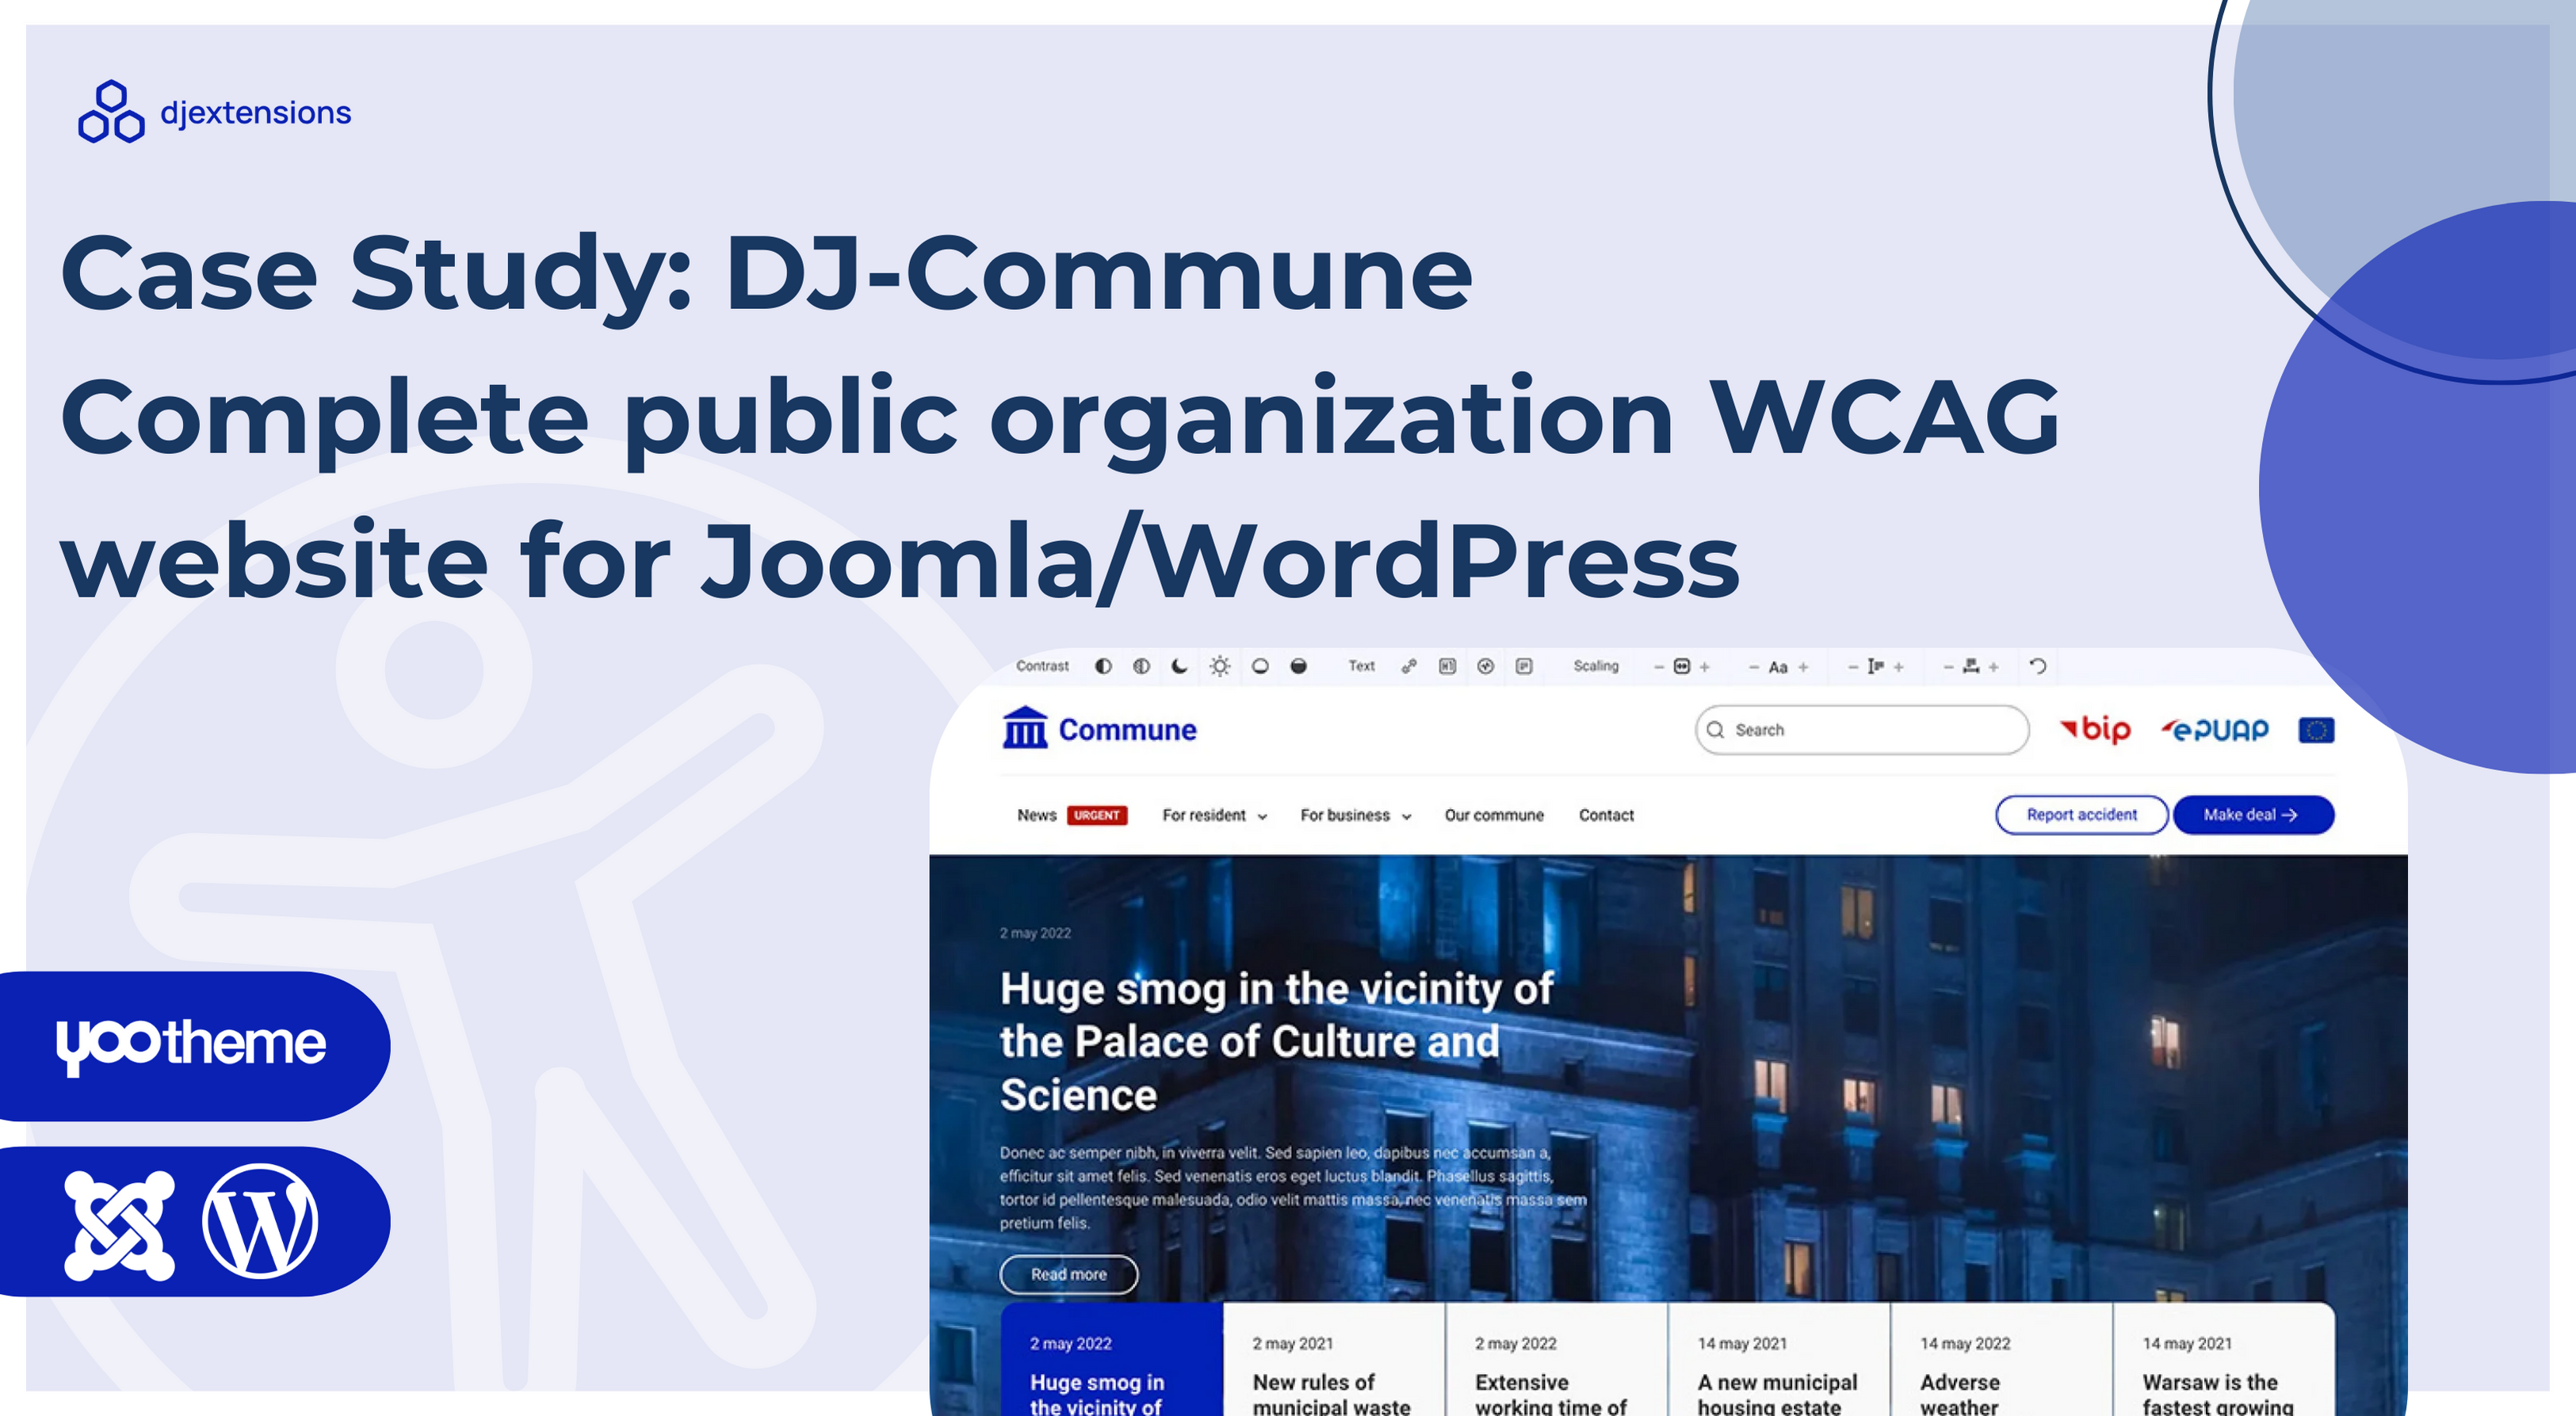 Case Study: DJ-Commune - the complete public organization WCAG website for Joomla/WordPress